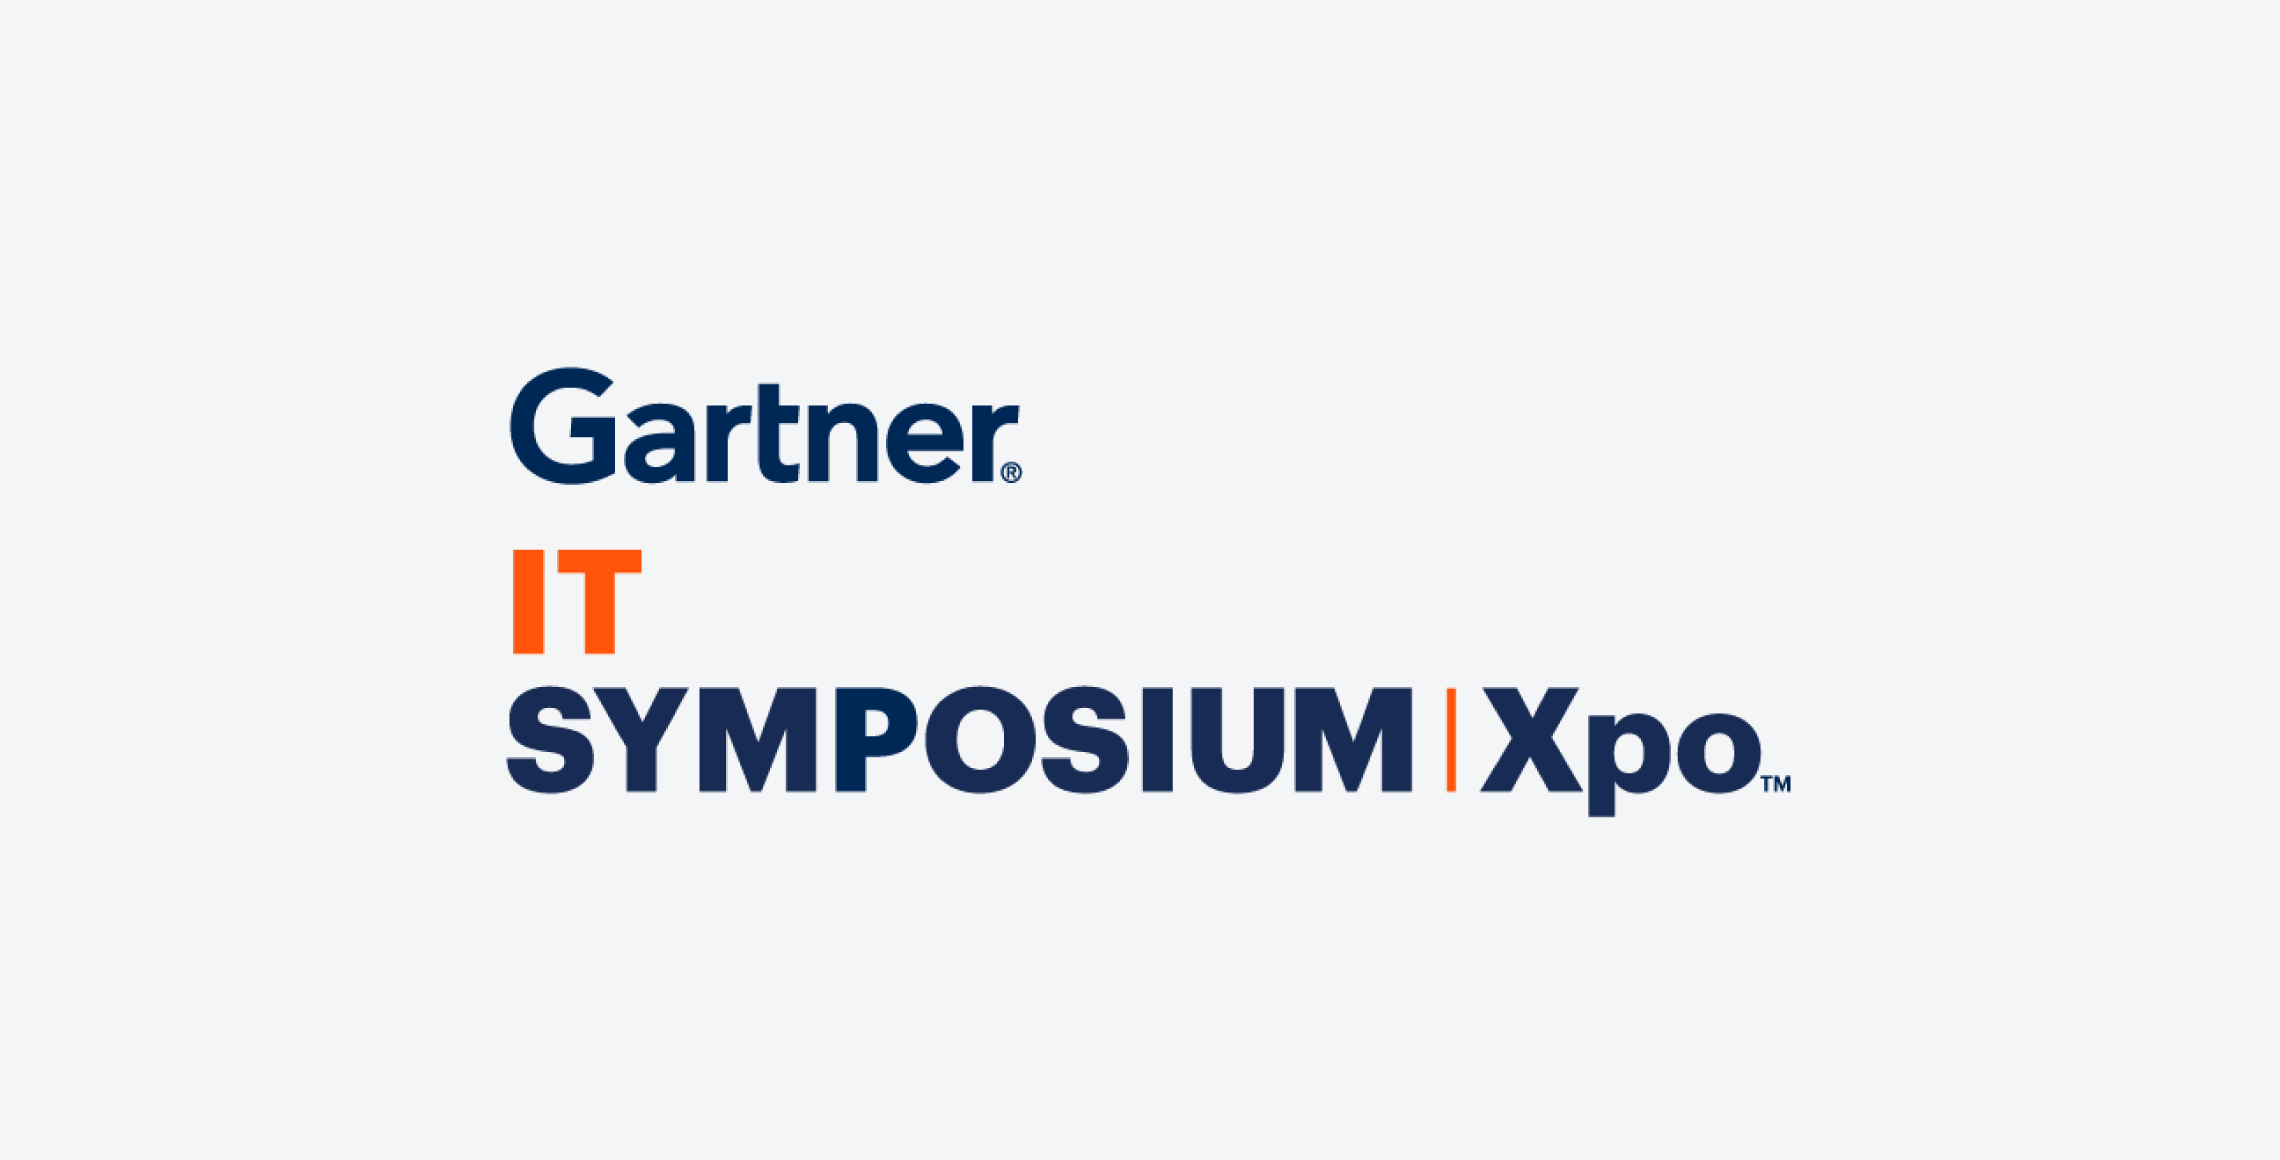 Gartner IT Symposium & Xpo EMEA Talkdesk